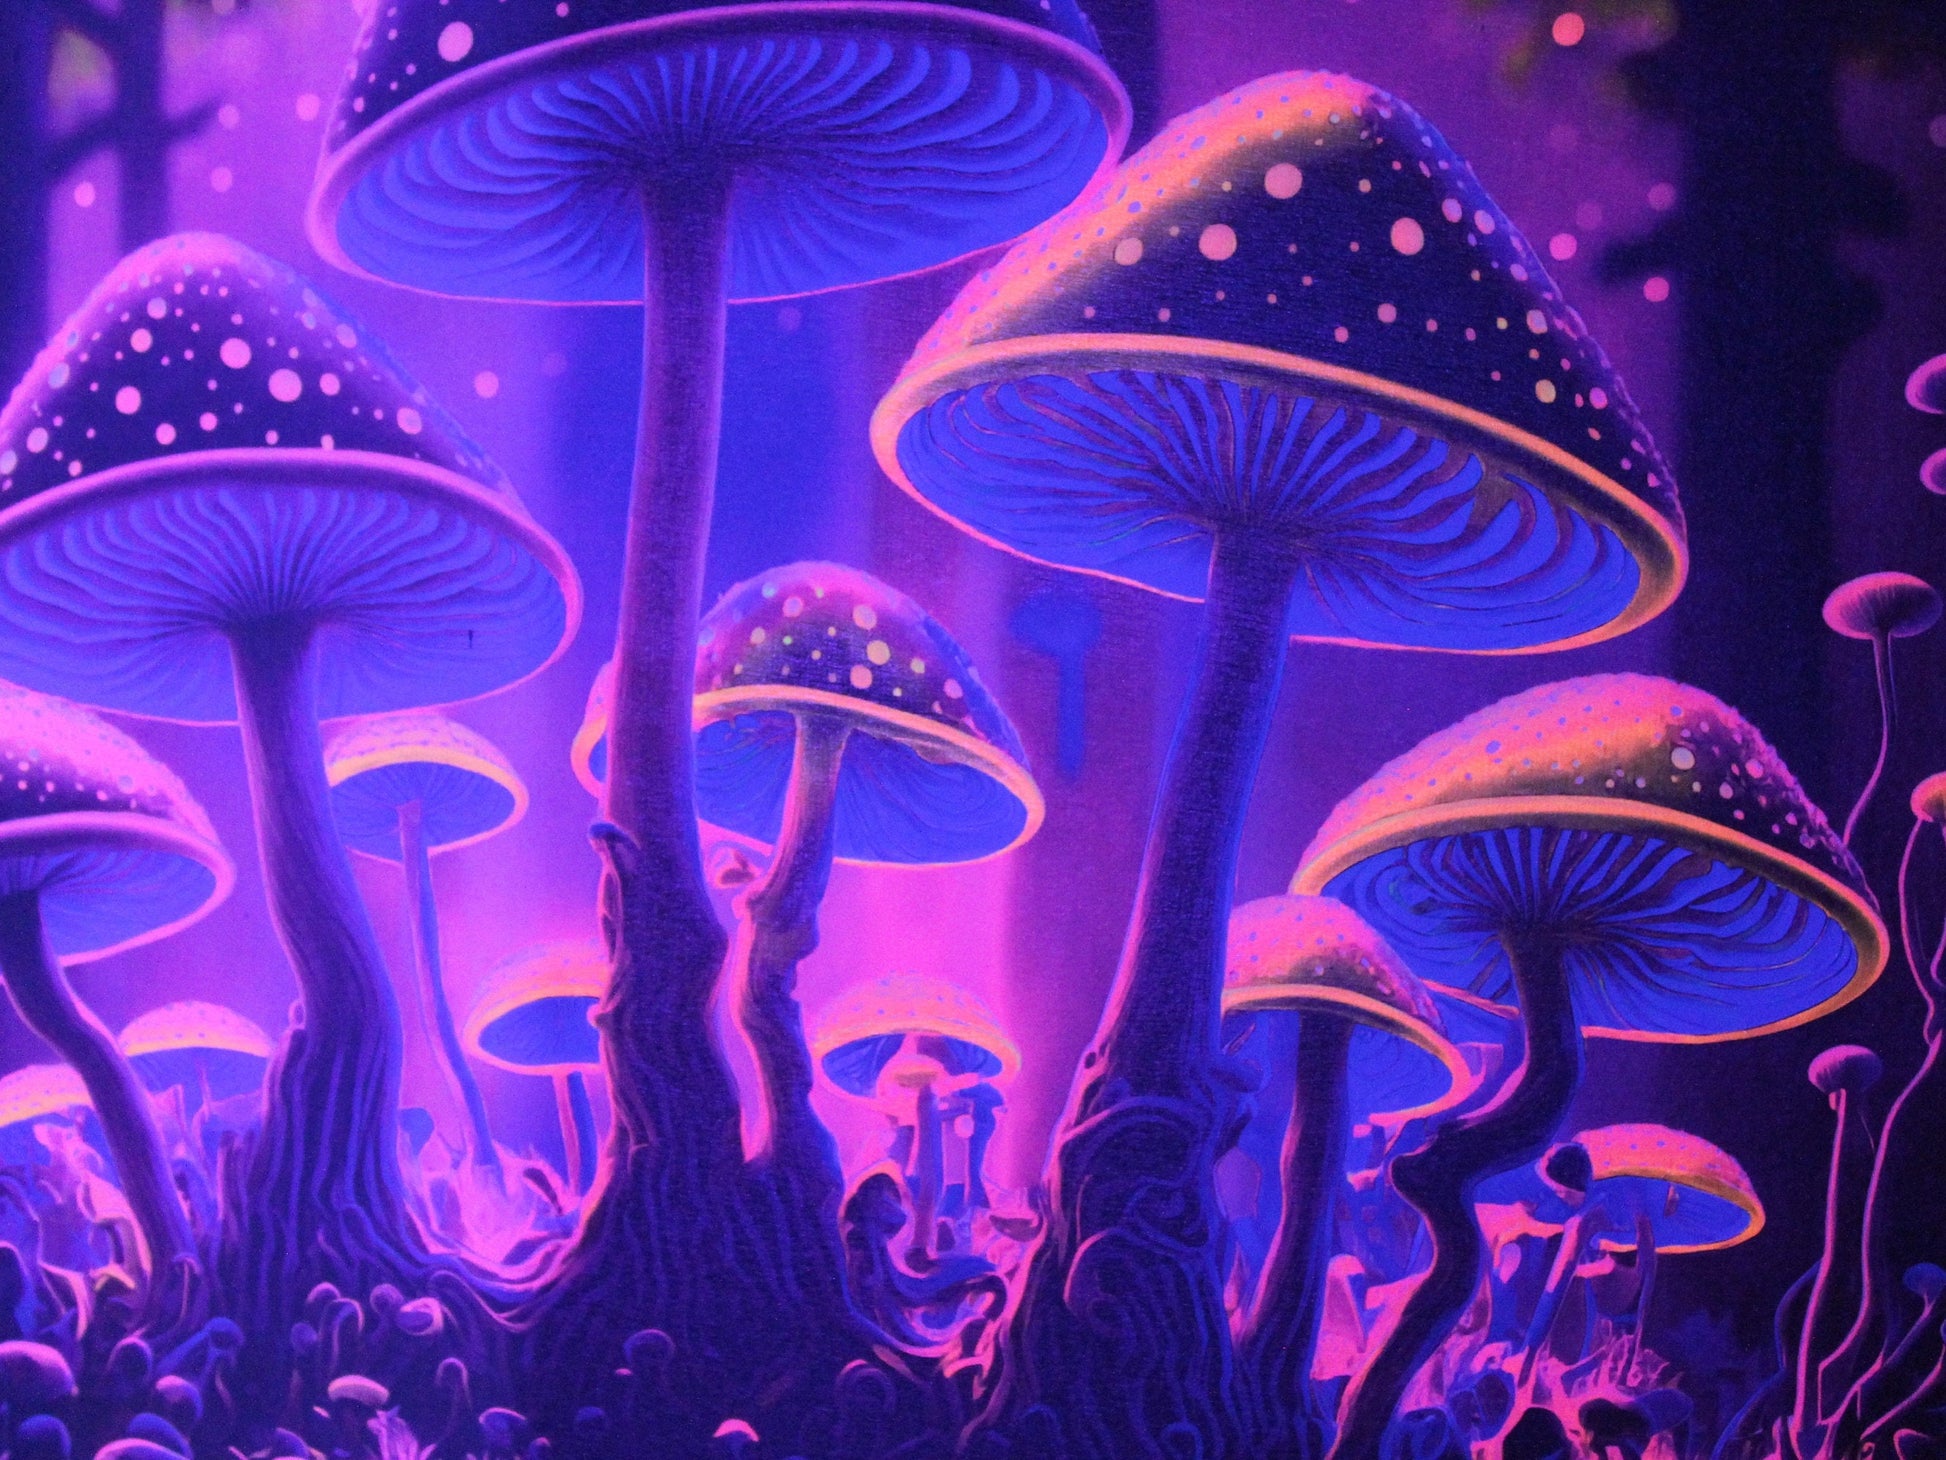 Mushroom Puffballs Fungi Extraterrestrial Fluorescent Black Light Reactive Ultraviolet PuttPutt Haunted House Outdoor Funhouse Decor Printed